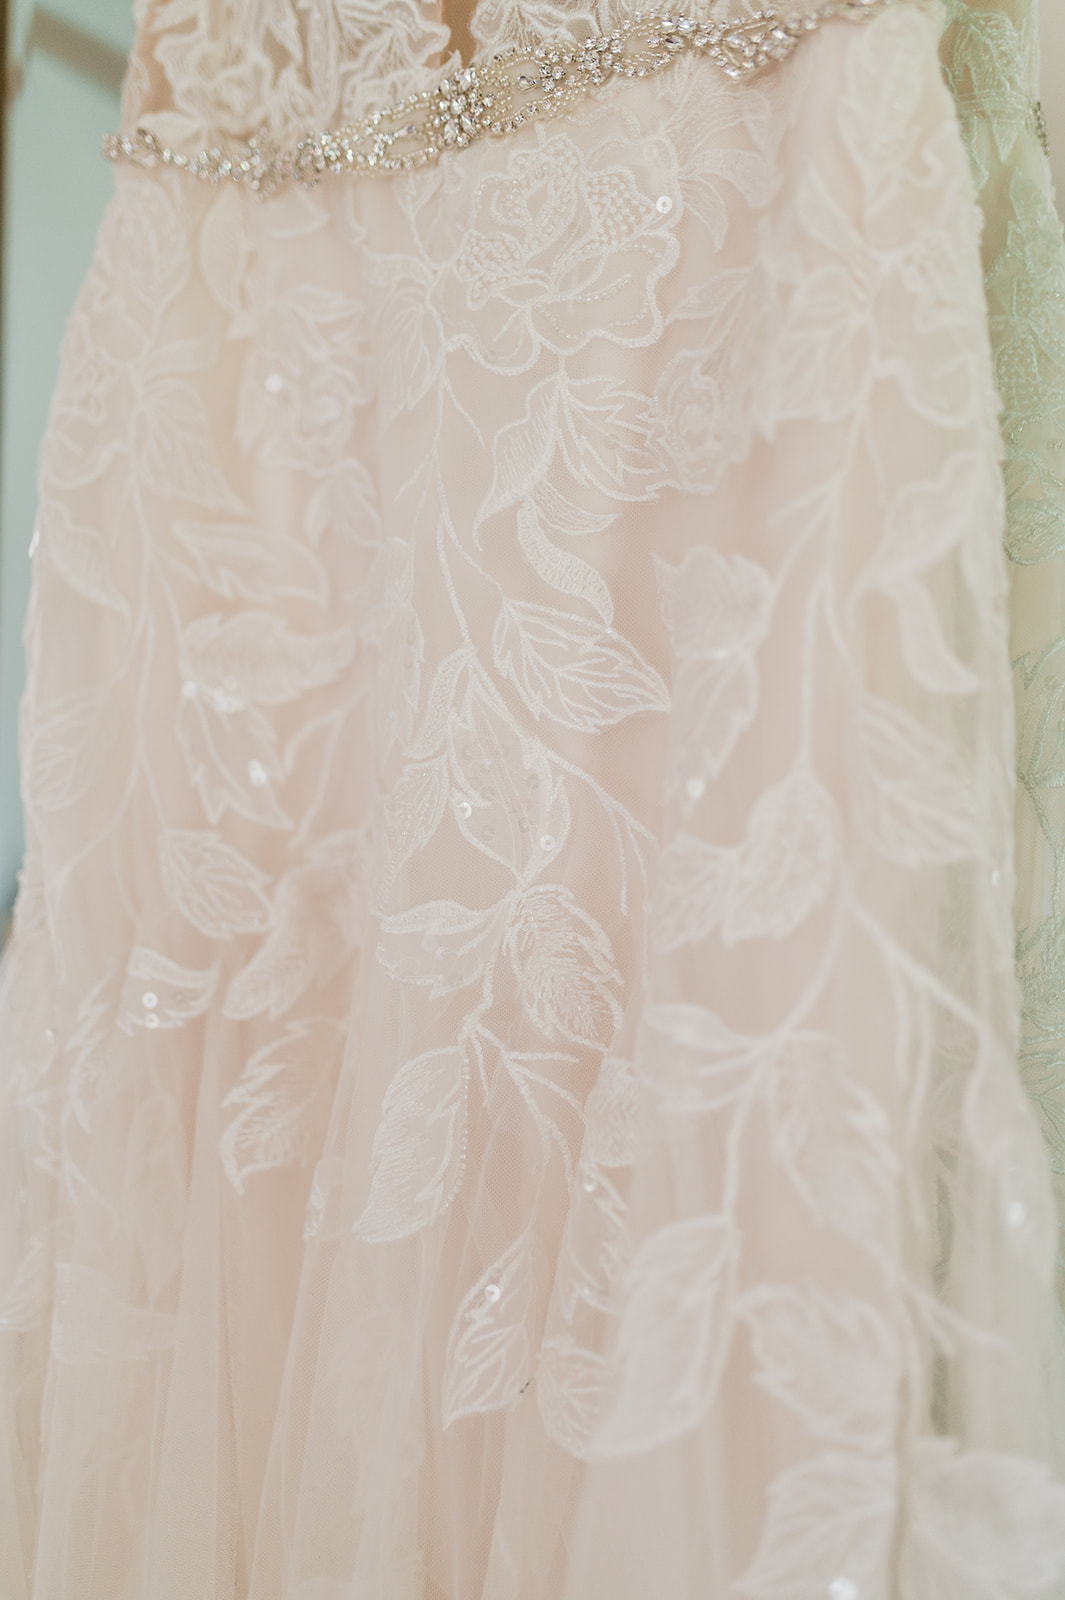 Close up shot of leaf pattern lace wedding dress